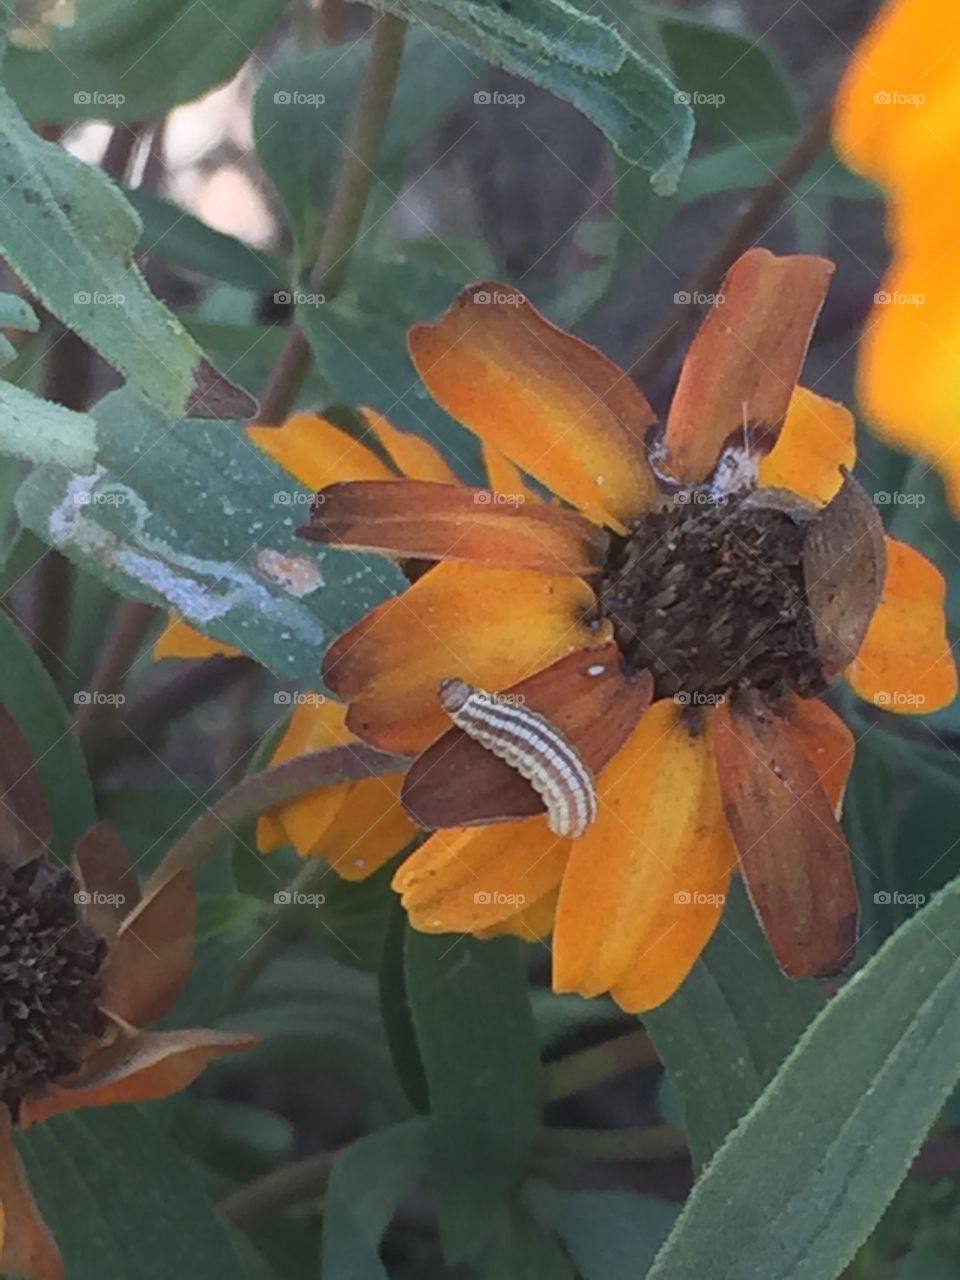 Caterpillar on flowers 